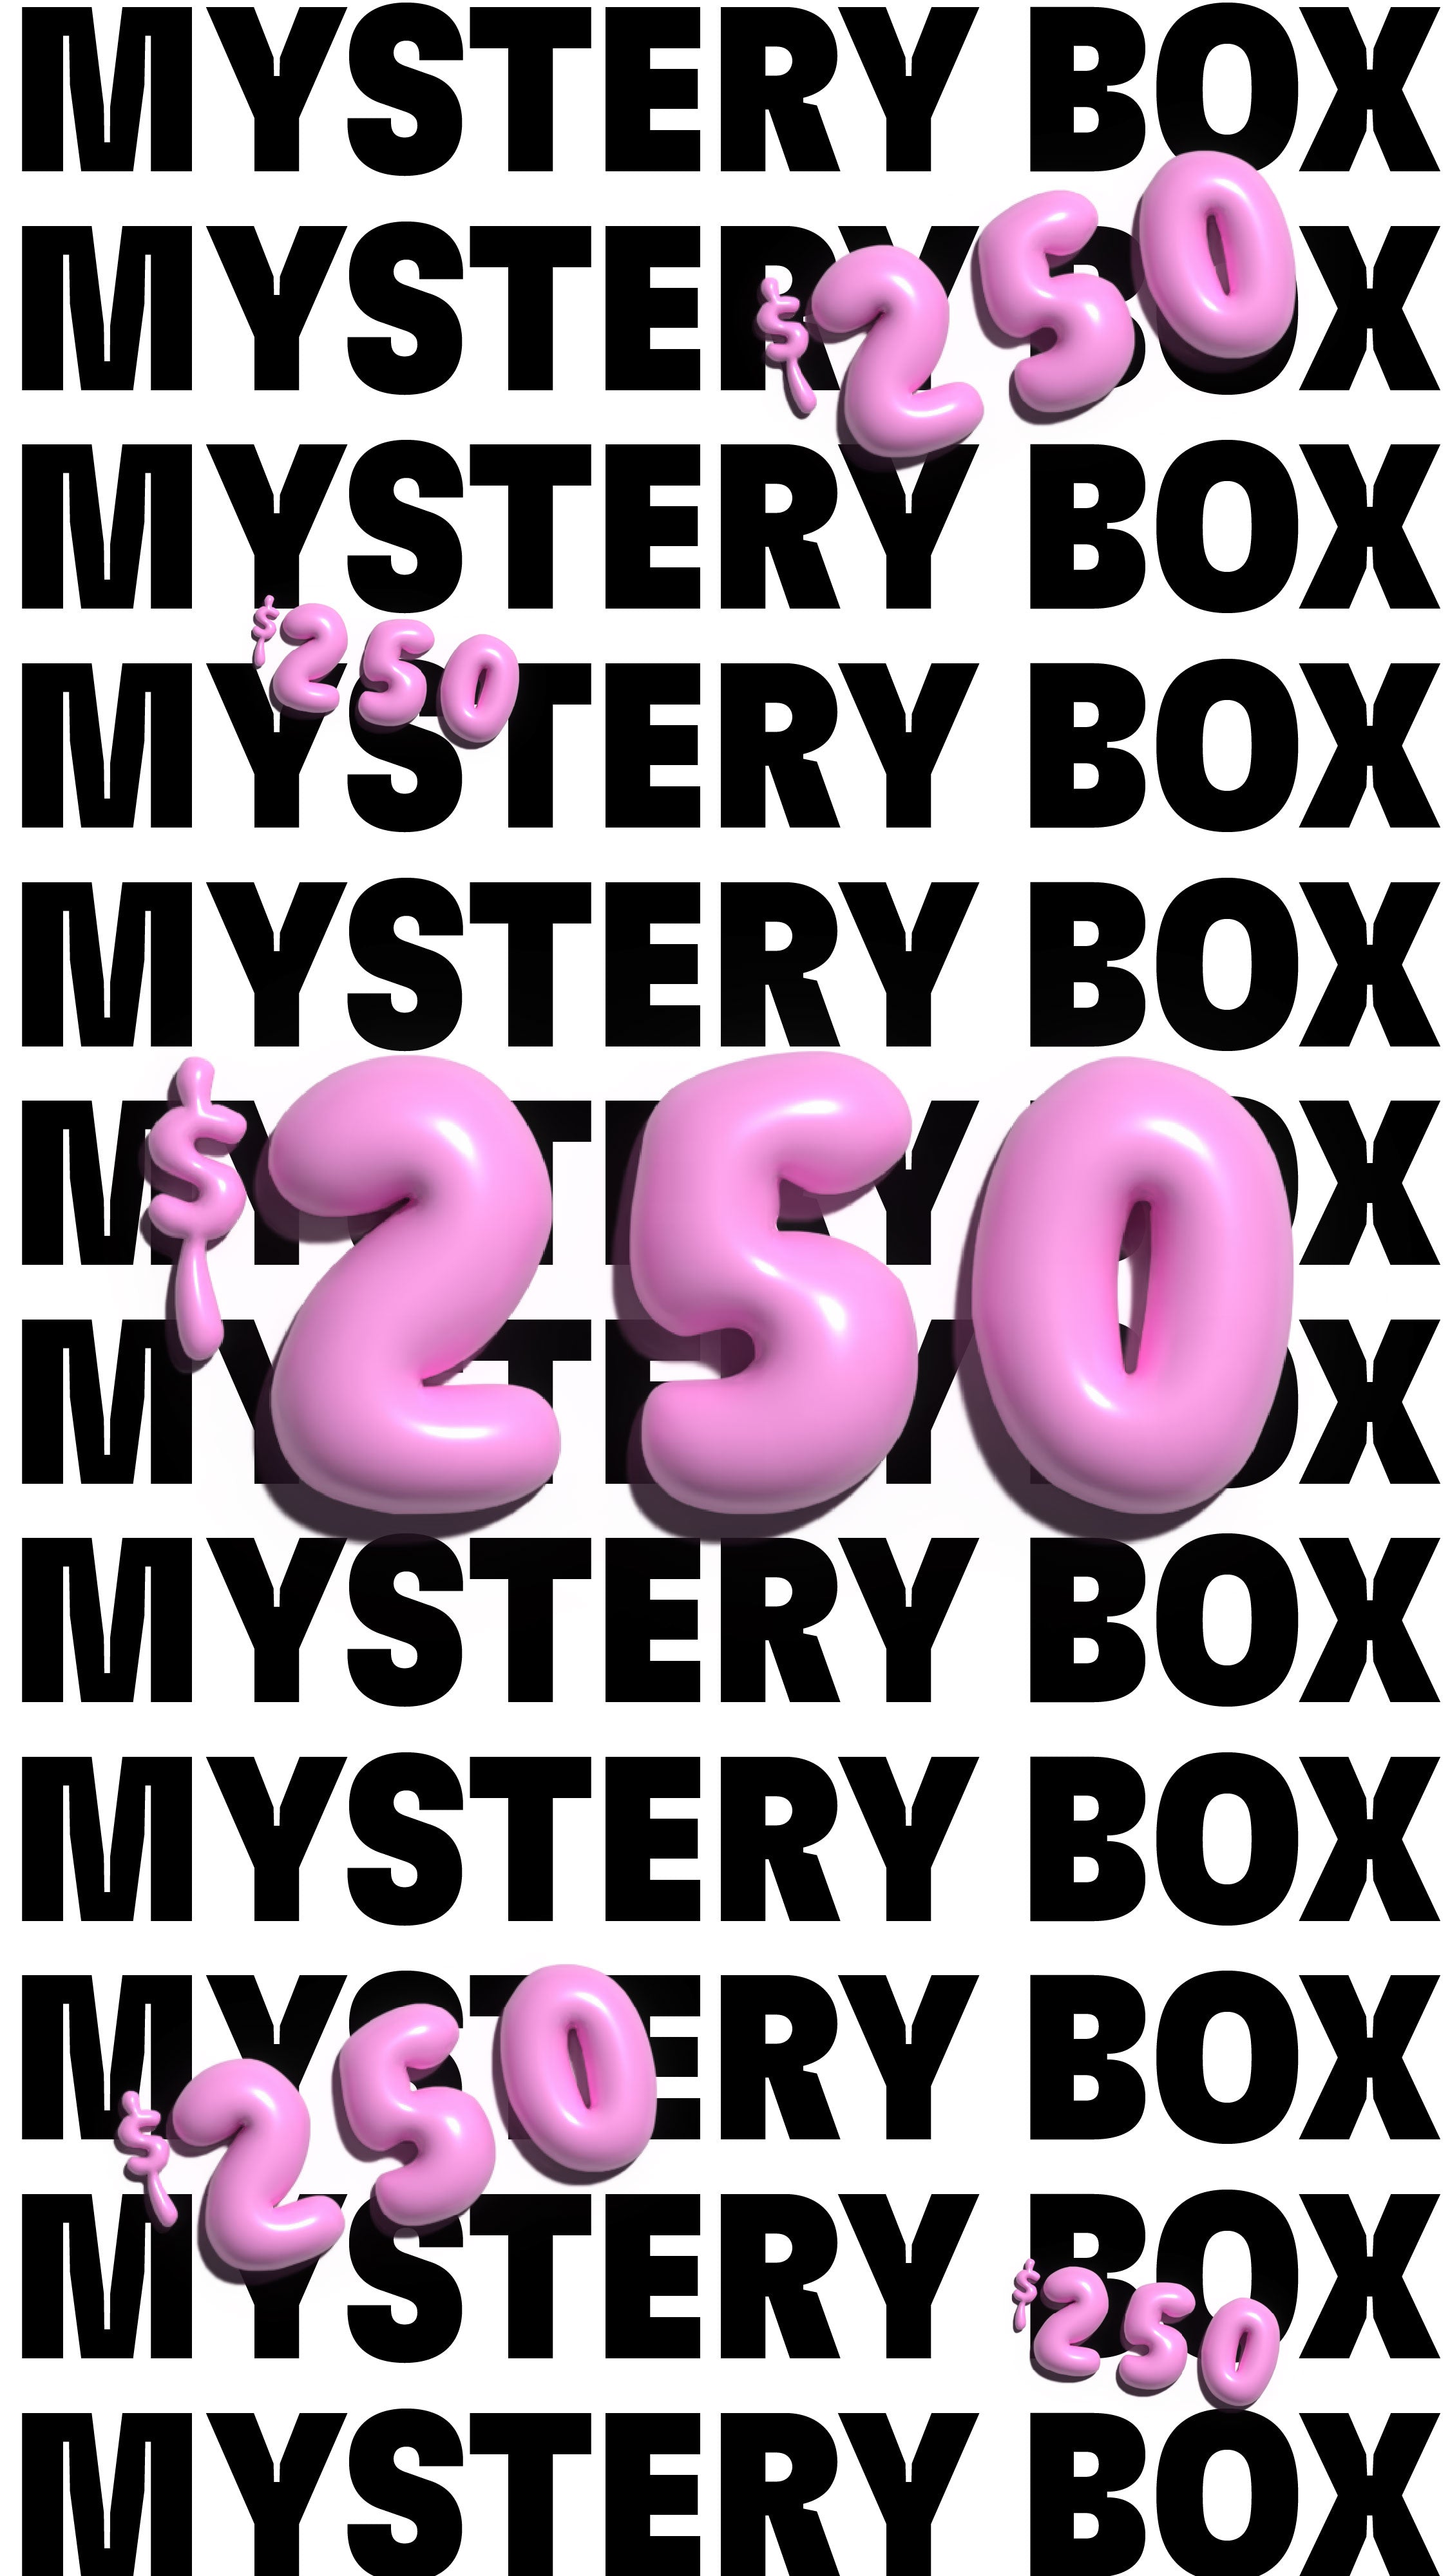 $250 Mystery Box (Apparel)